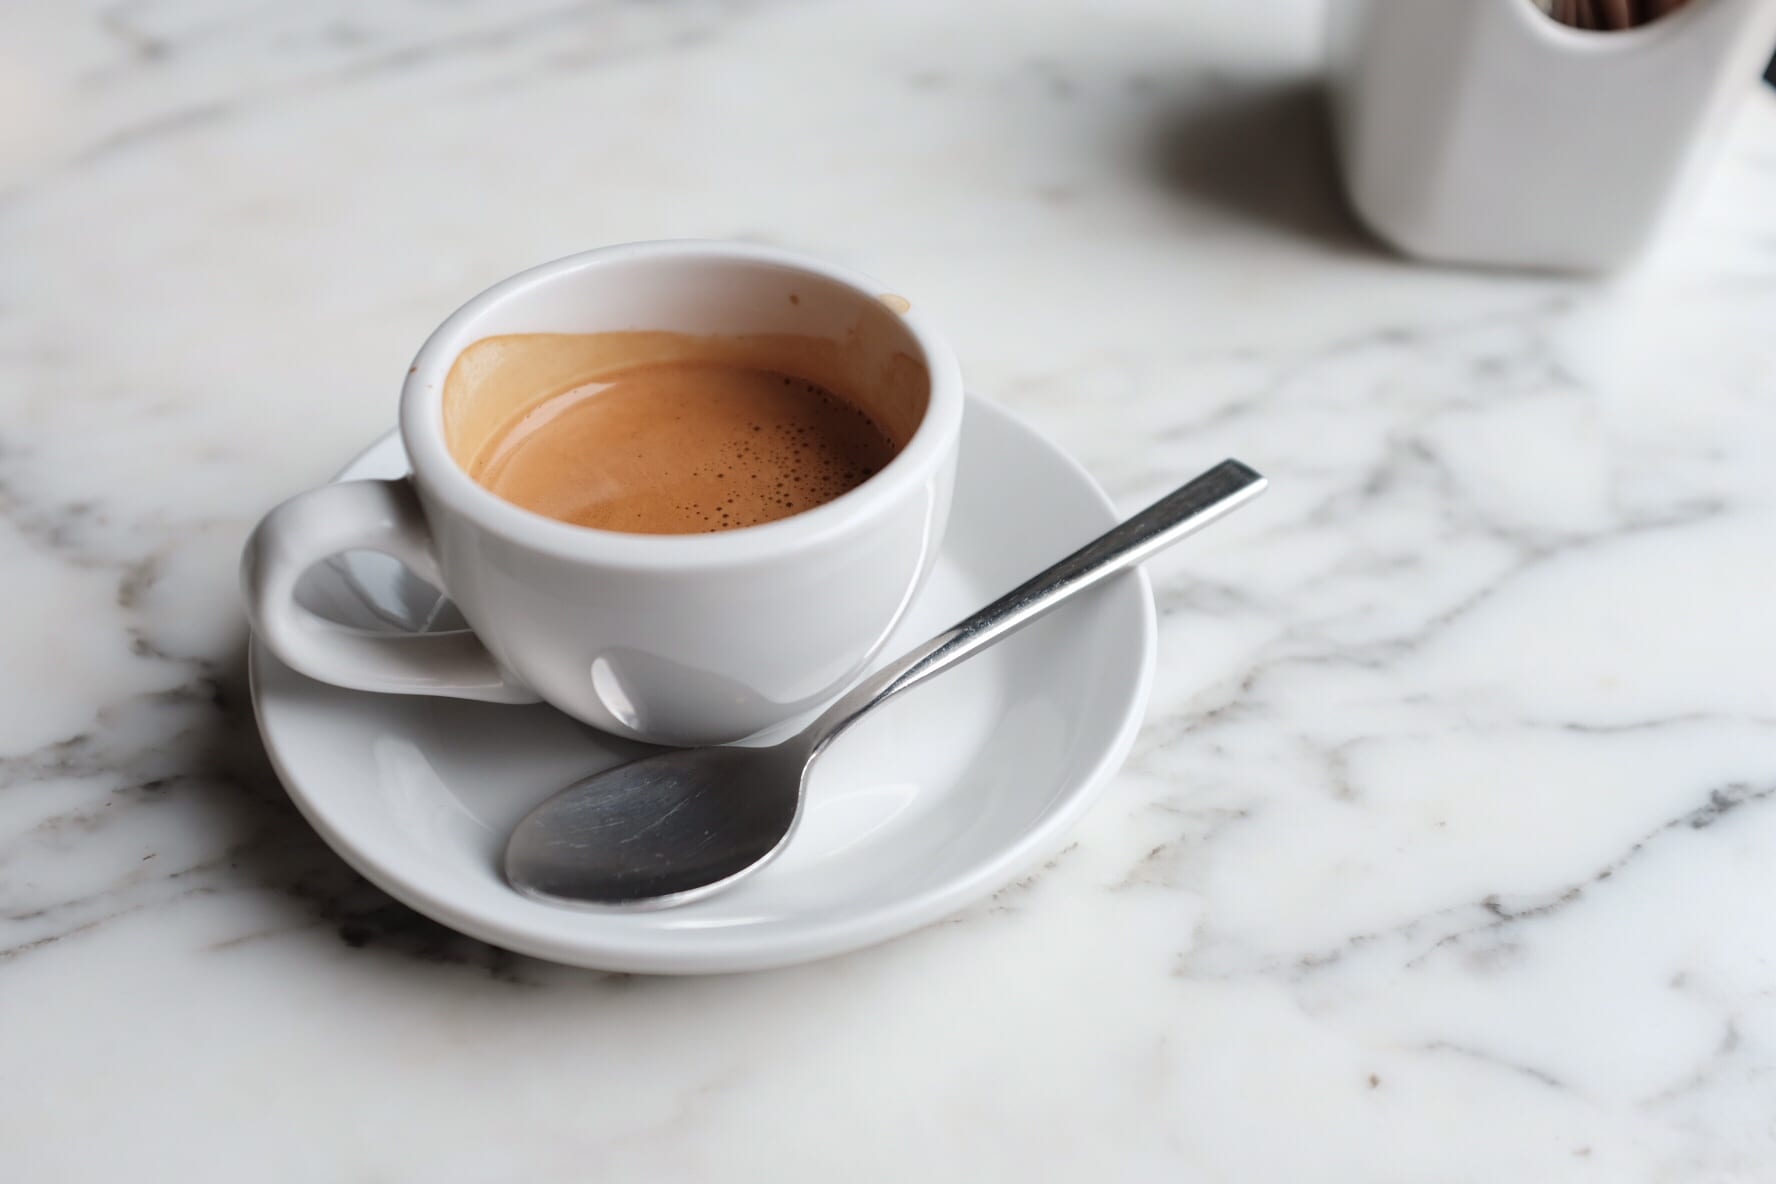 How to Drink Espresso